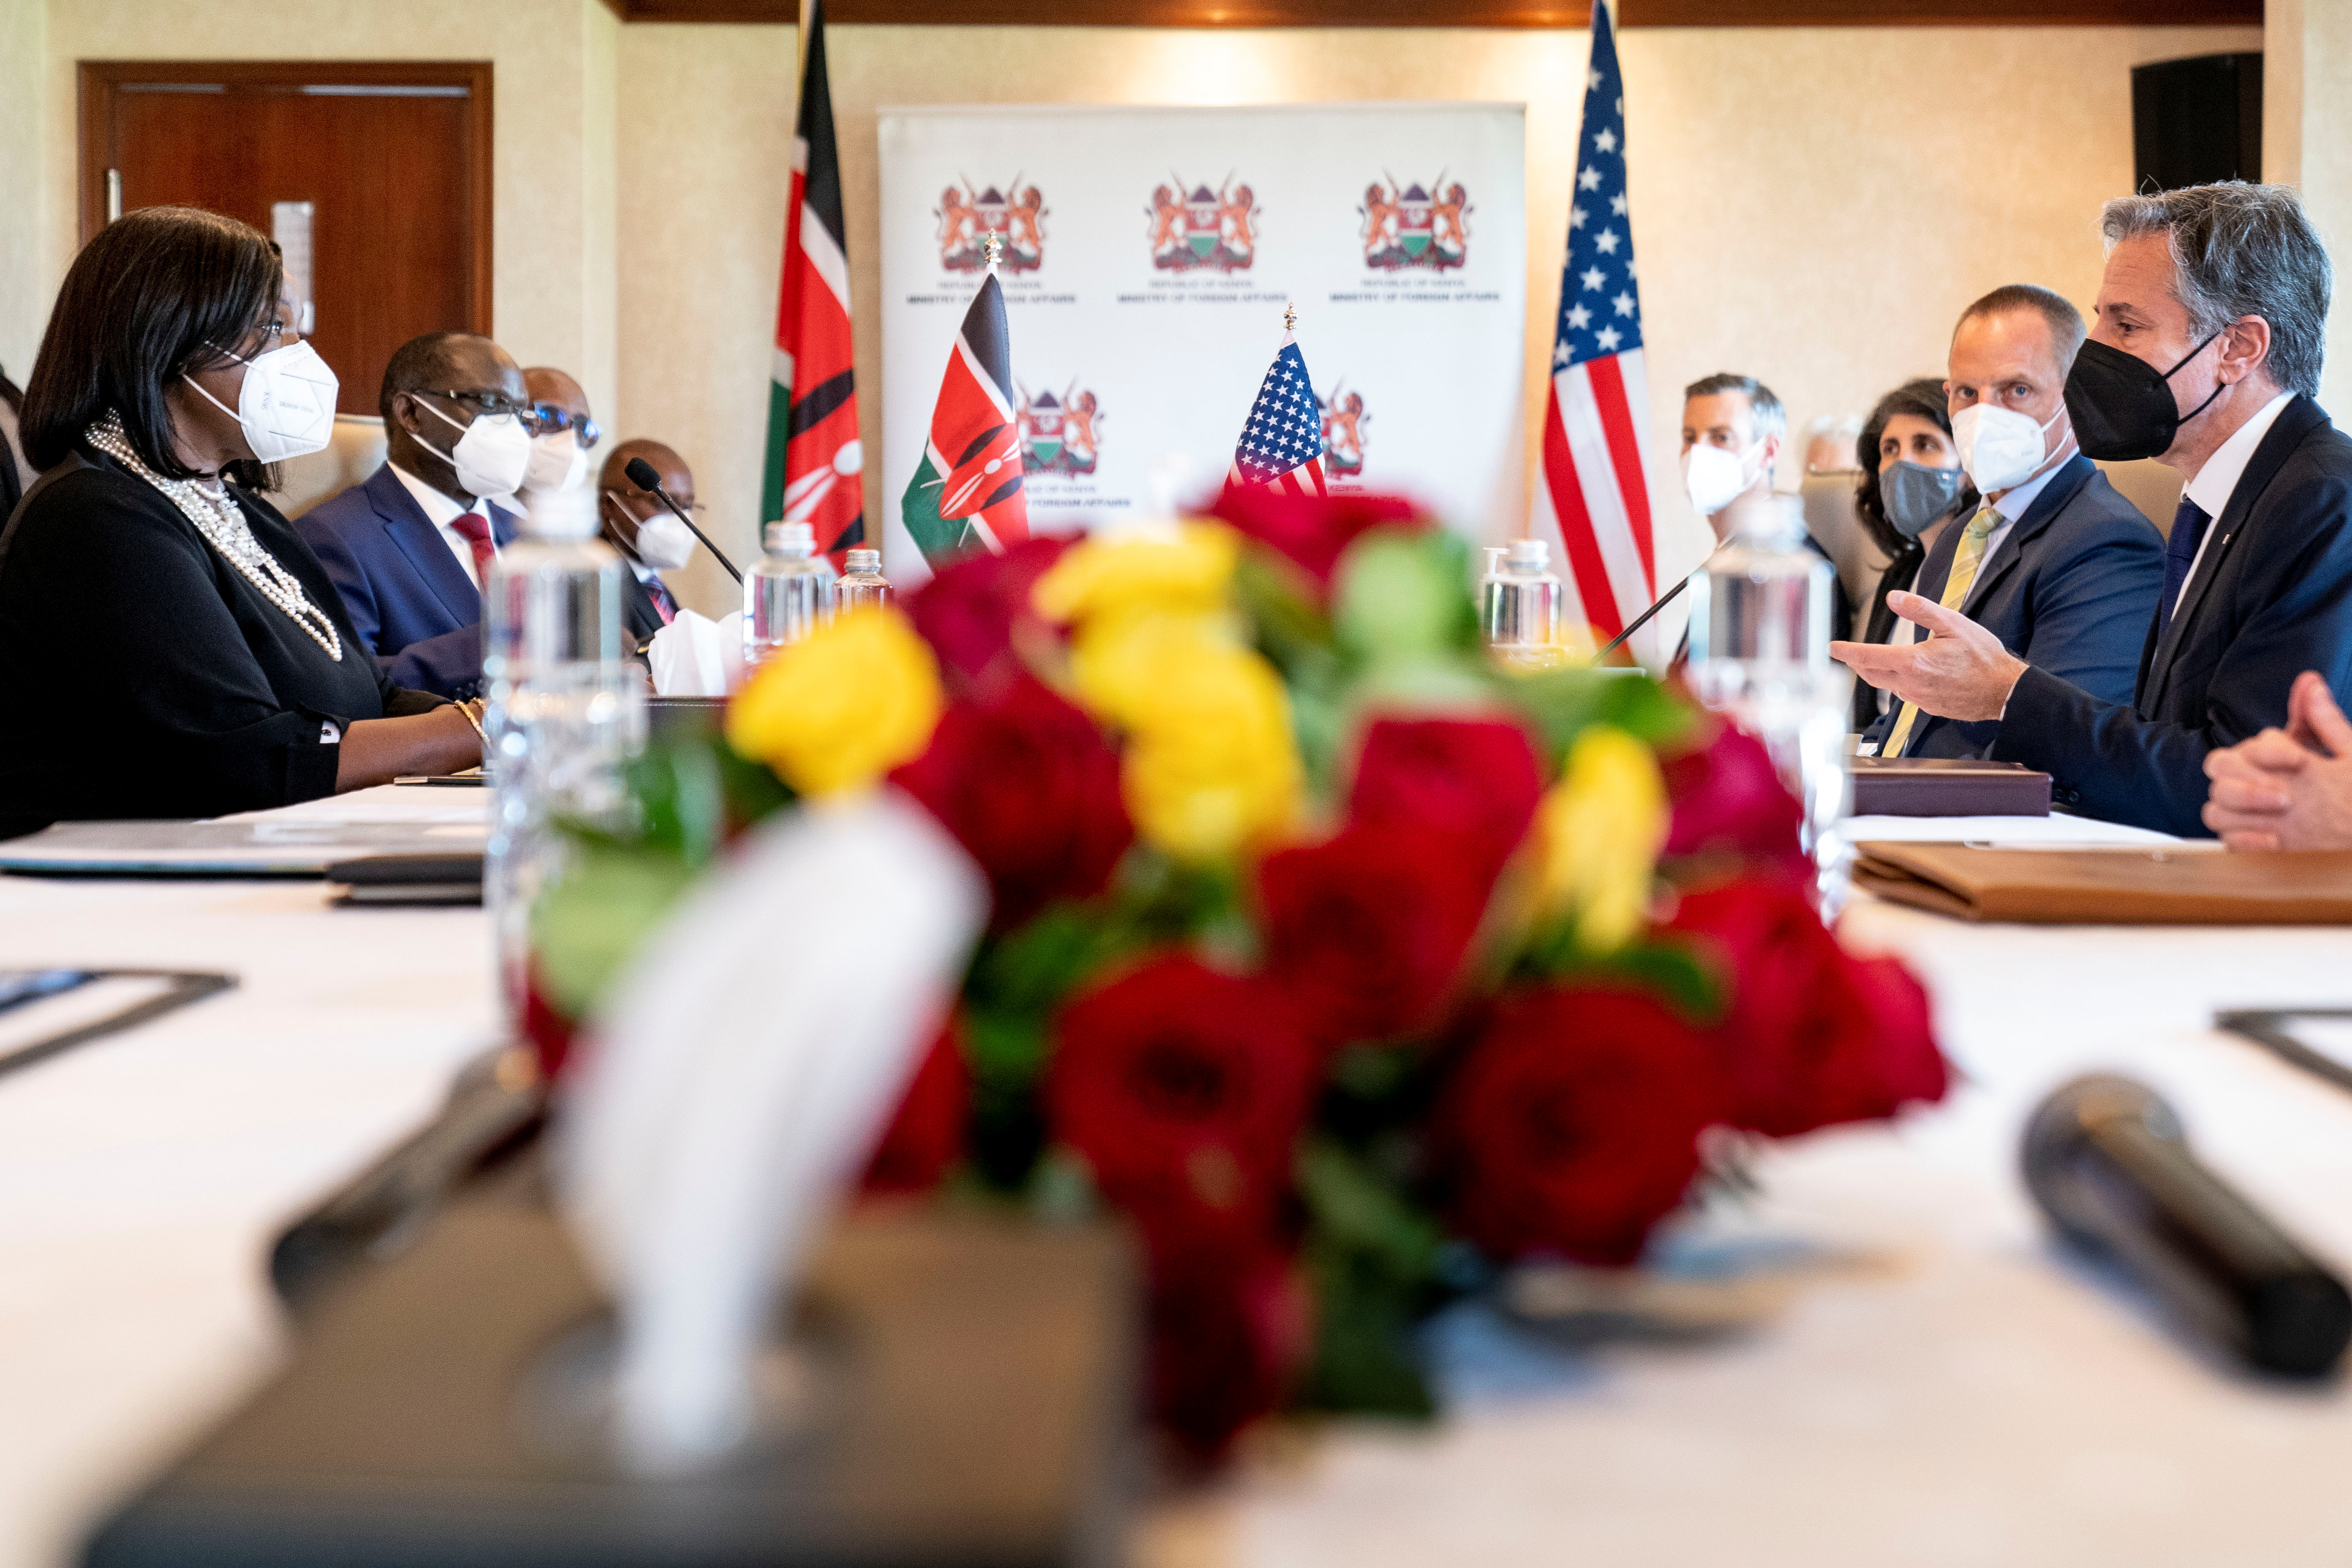 U.S Secretary of State Antony Blinken, speaks during a meeting with Kenya's Cabinet Secretary for Foreign Affairs, Ambassador Raychelle Omamo, at the Serena Hotel in Nairobi, Kenya, November 17, 2021. Andrew Harnik/Pool via REUTERS